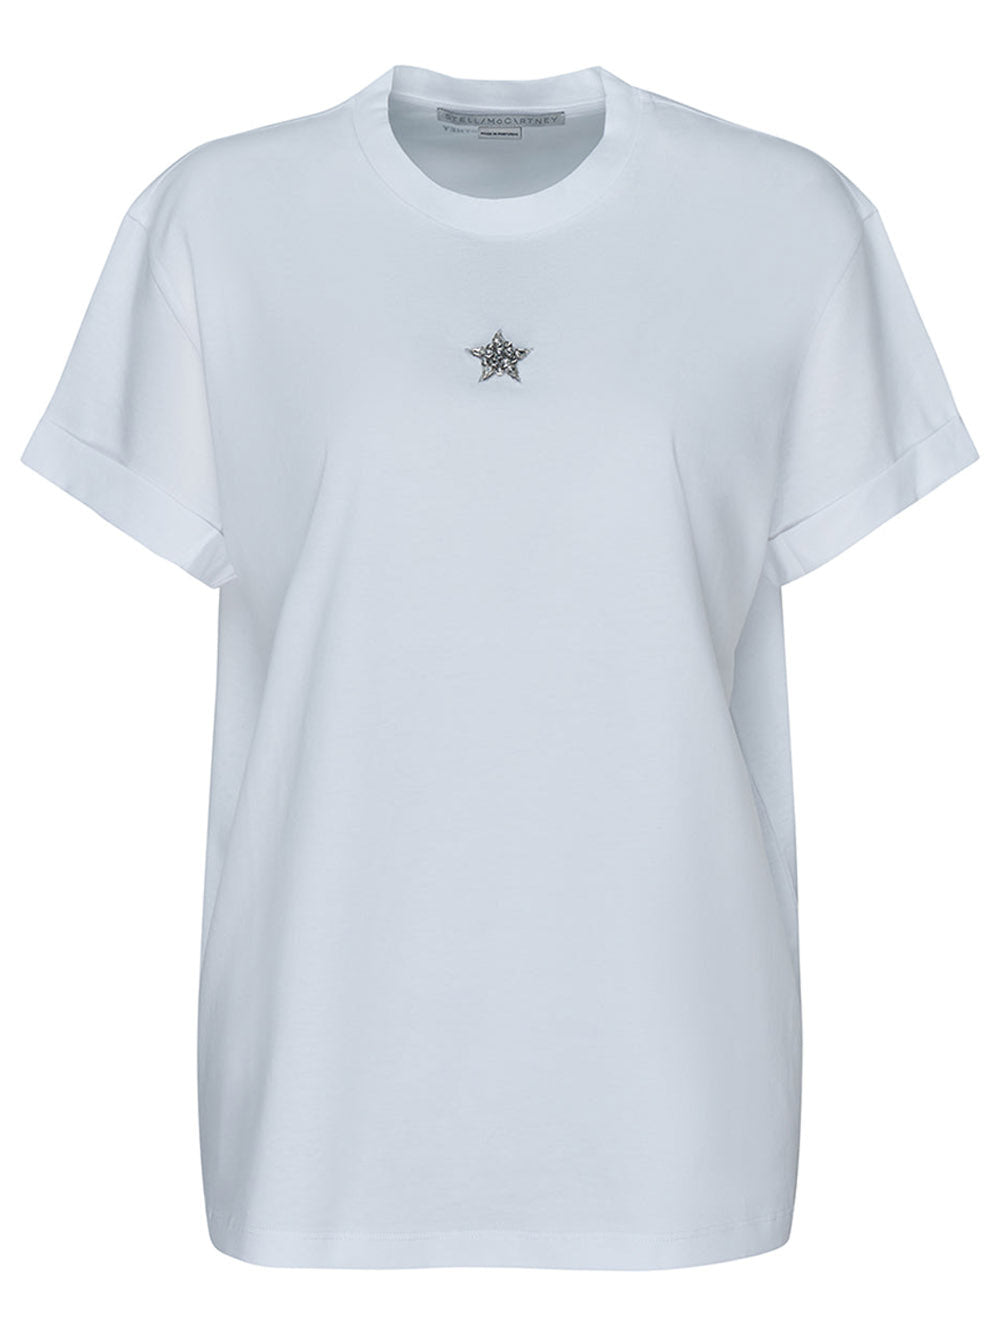     Stella-McCartney-Crystal-Mini-Star-Embroidery-T-Shirt-White-1